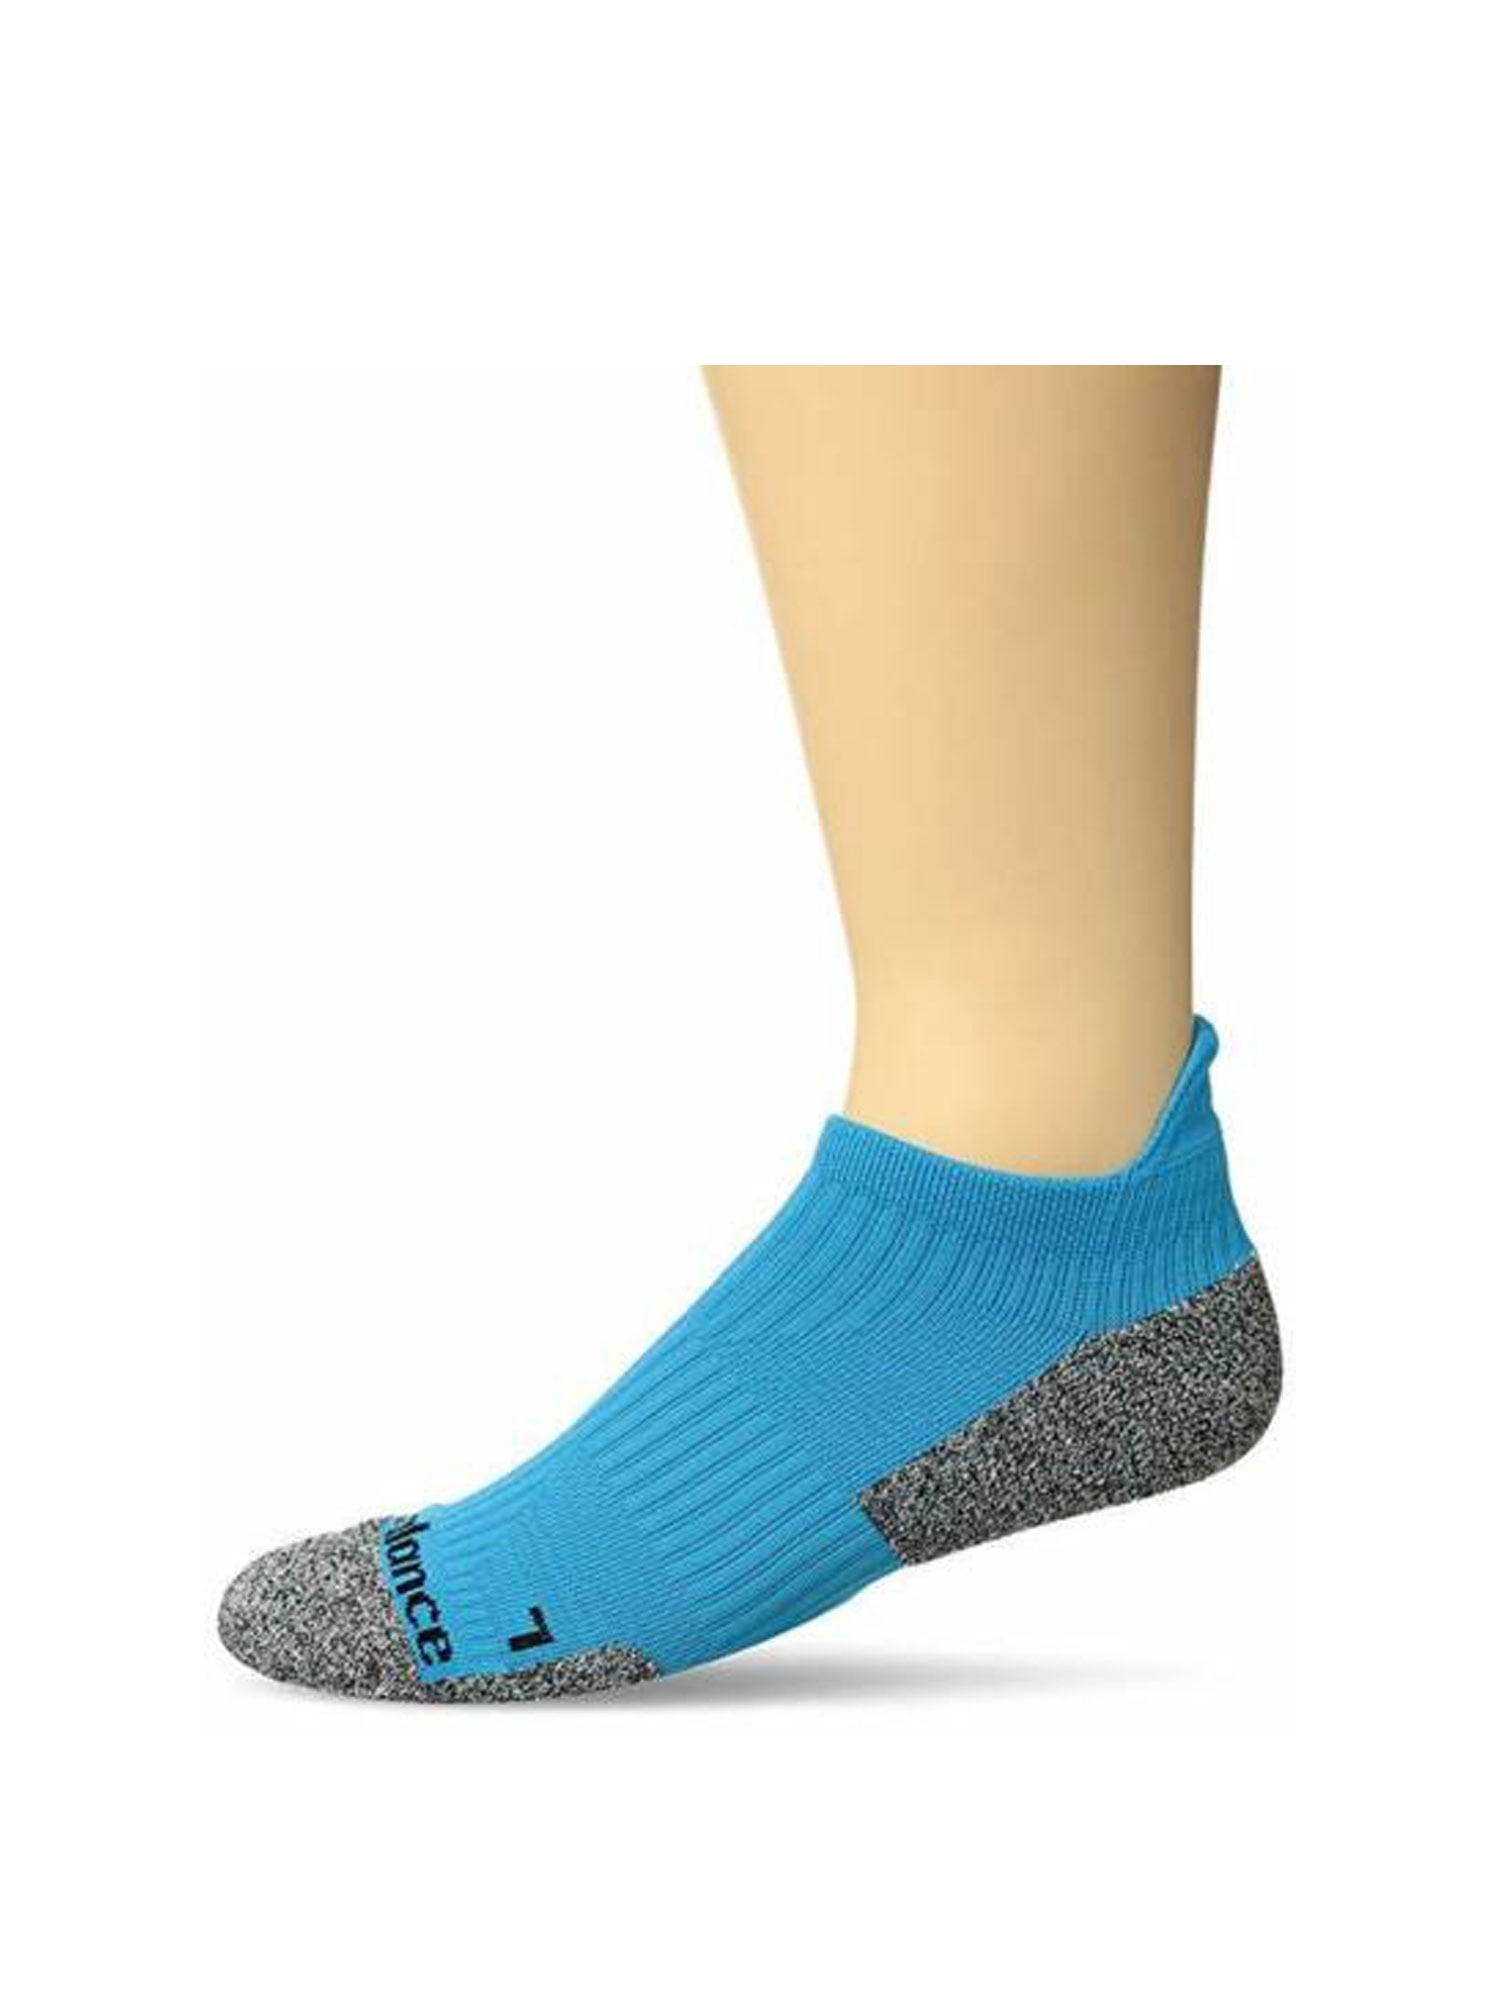 New Balance Womens Socks - Walmart.com